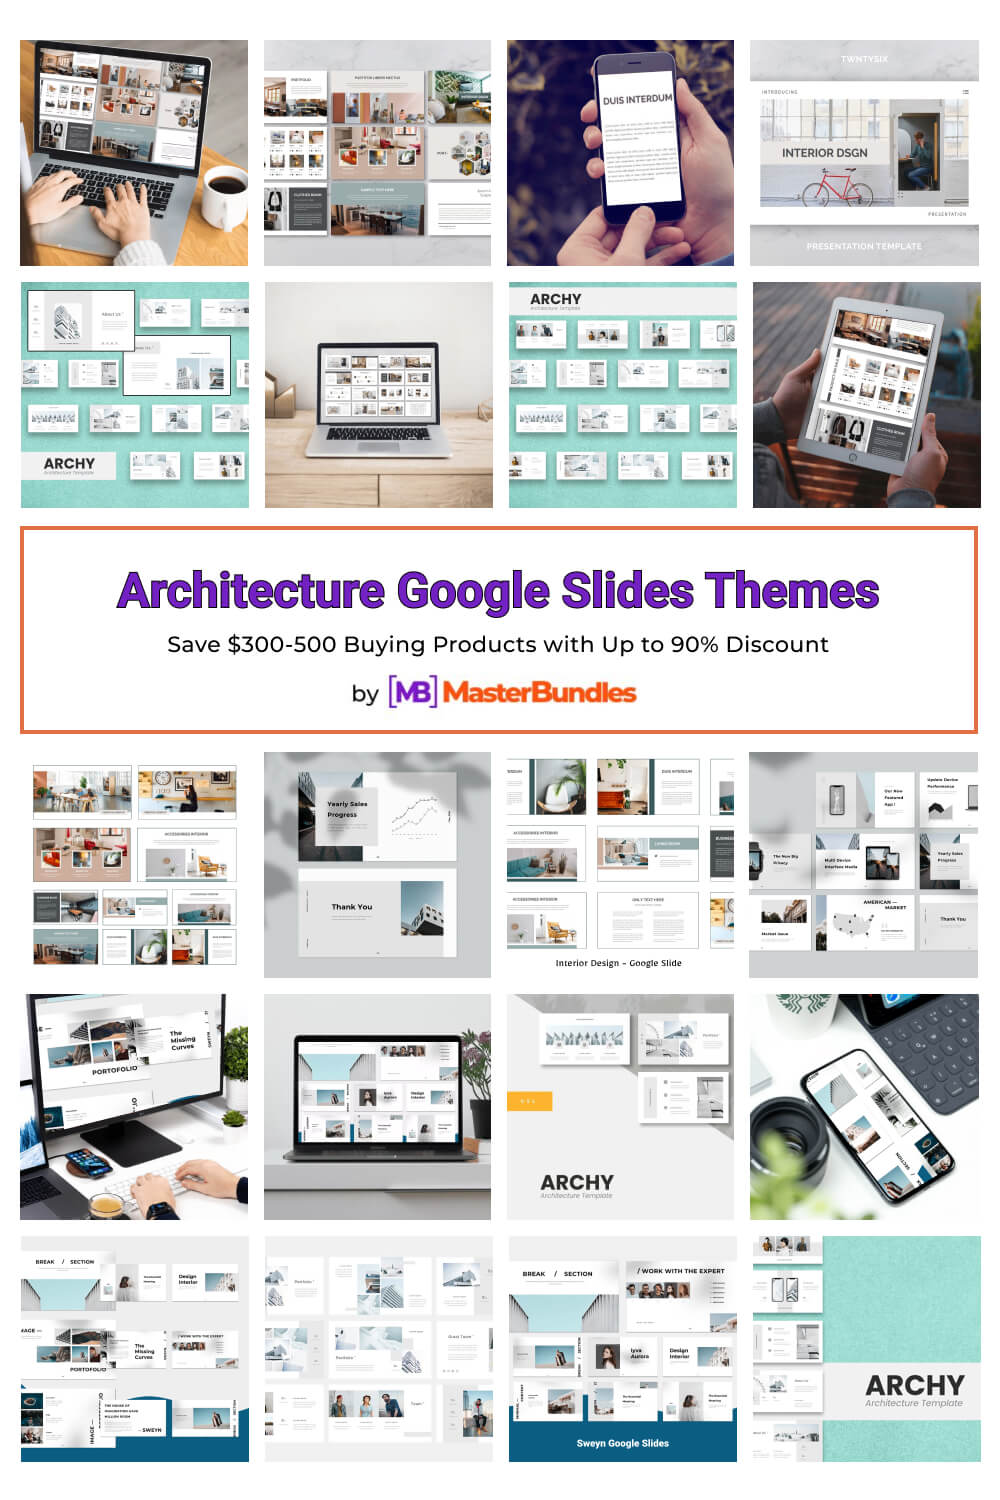 architecture google slides themes pinterest image.